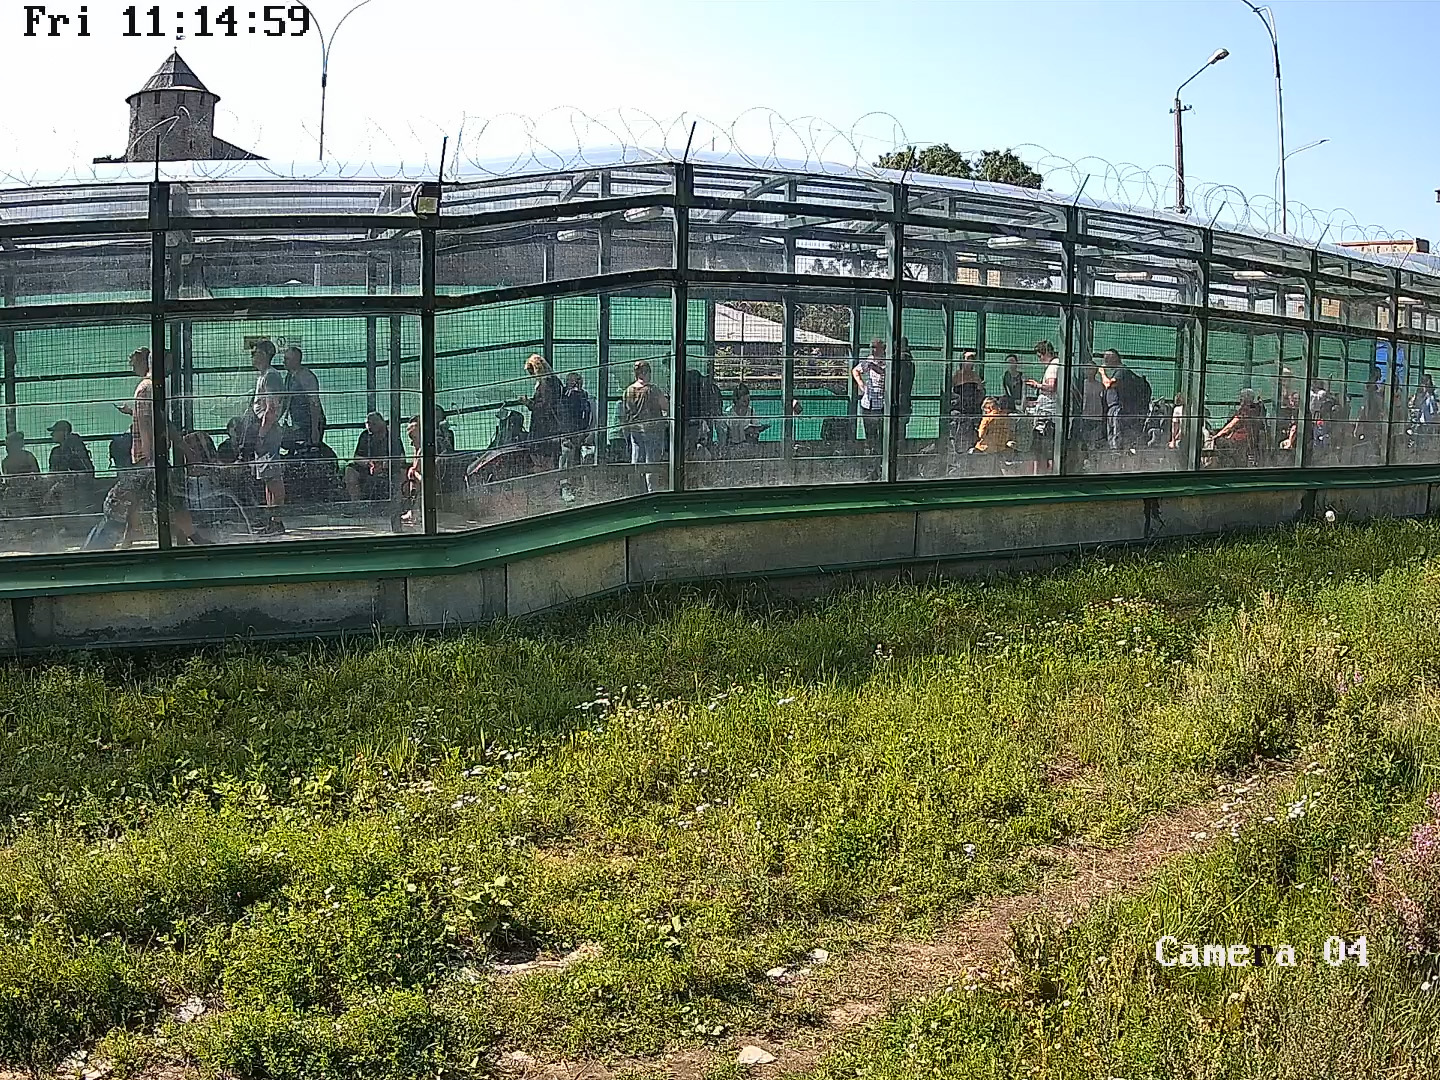 Фото: Камера на погранпереходе Ивангород - Нарва